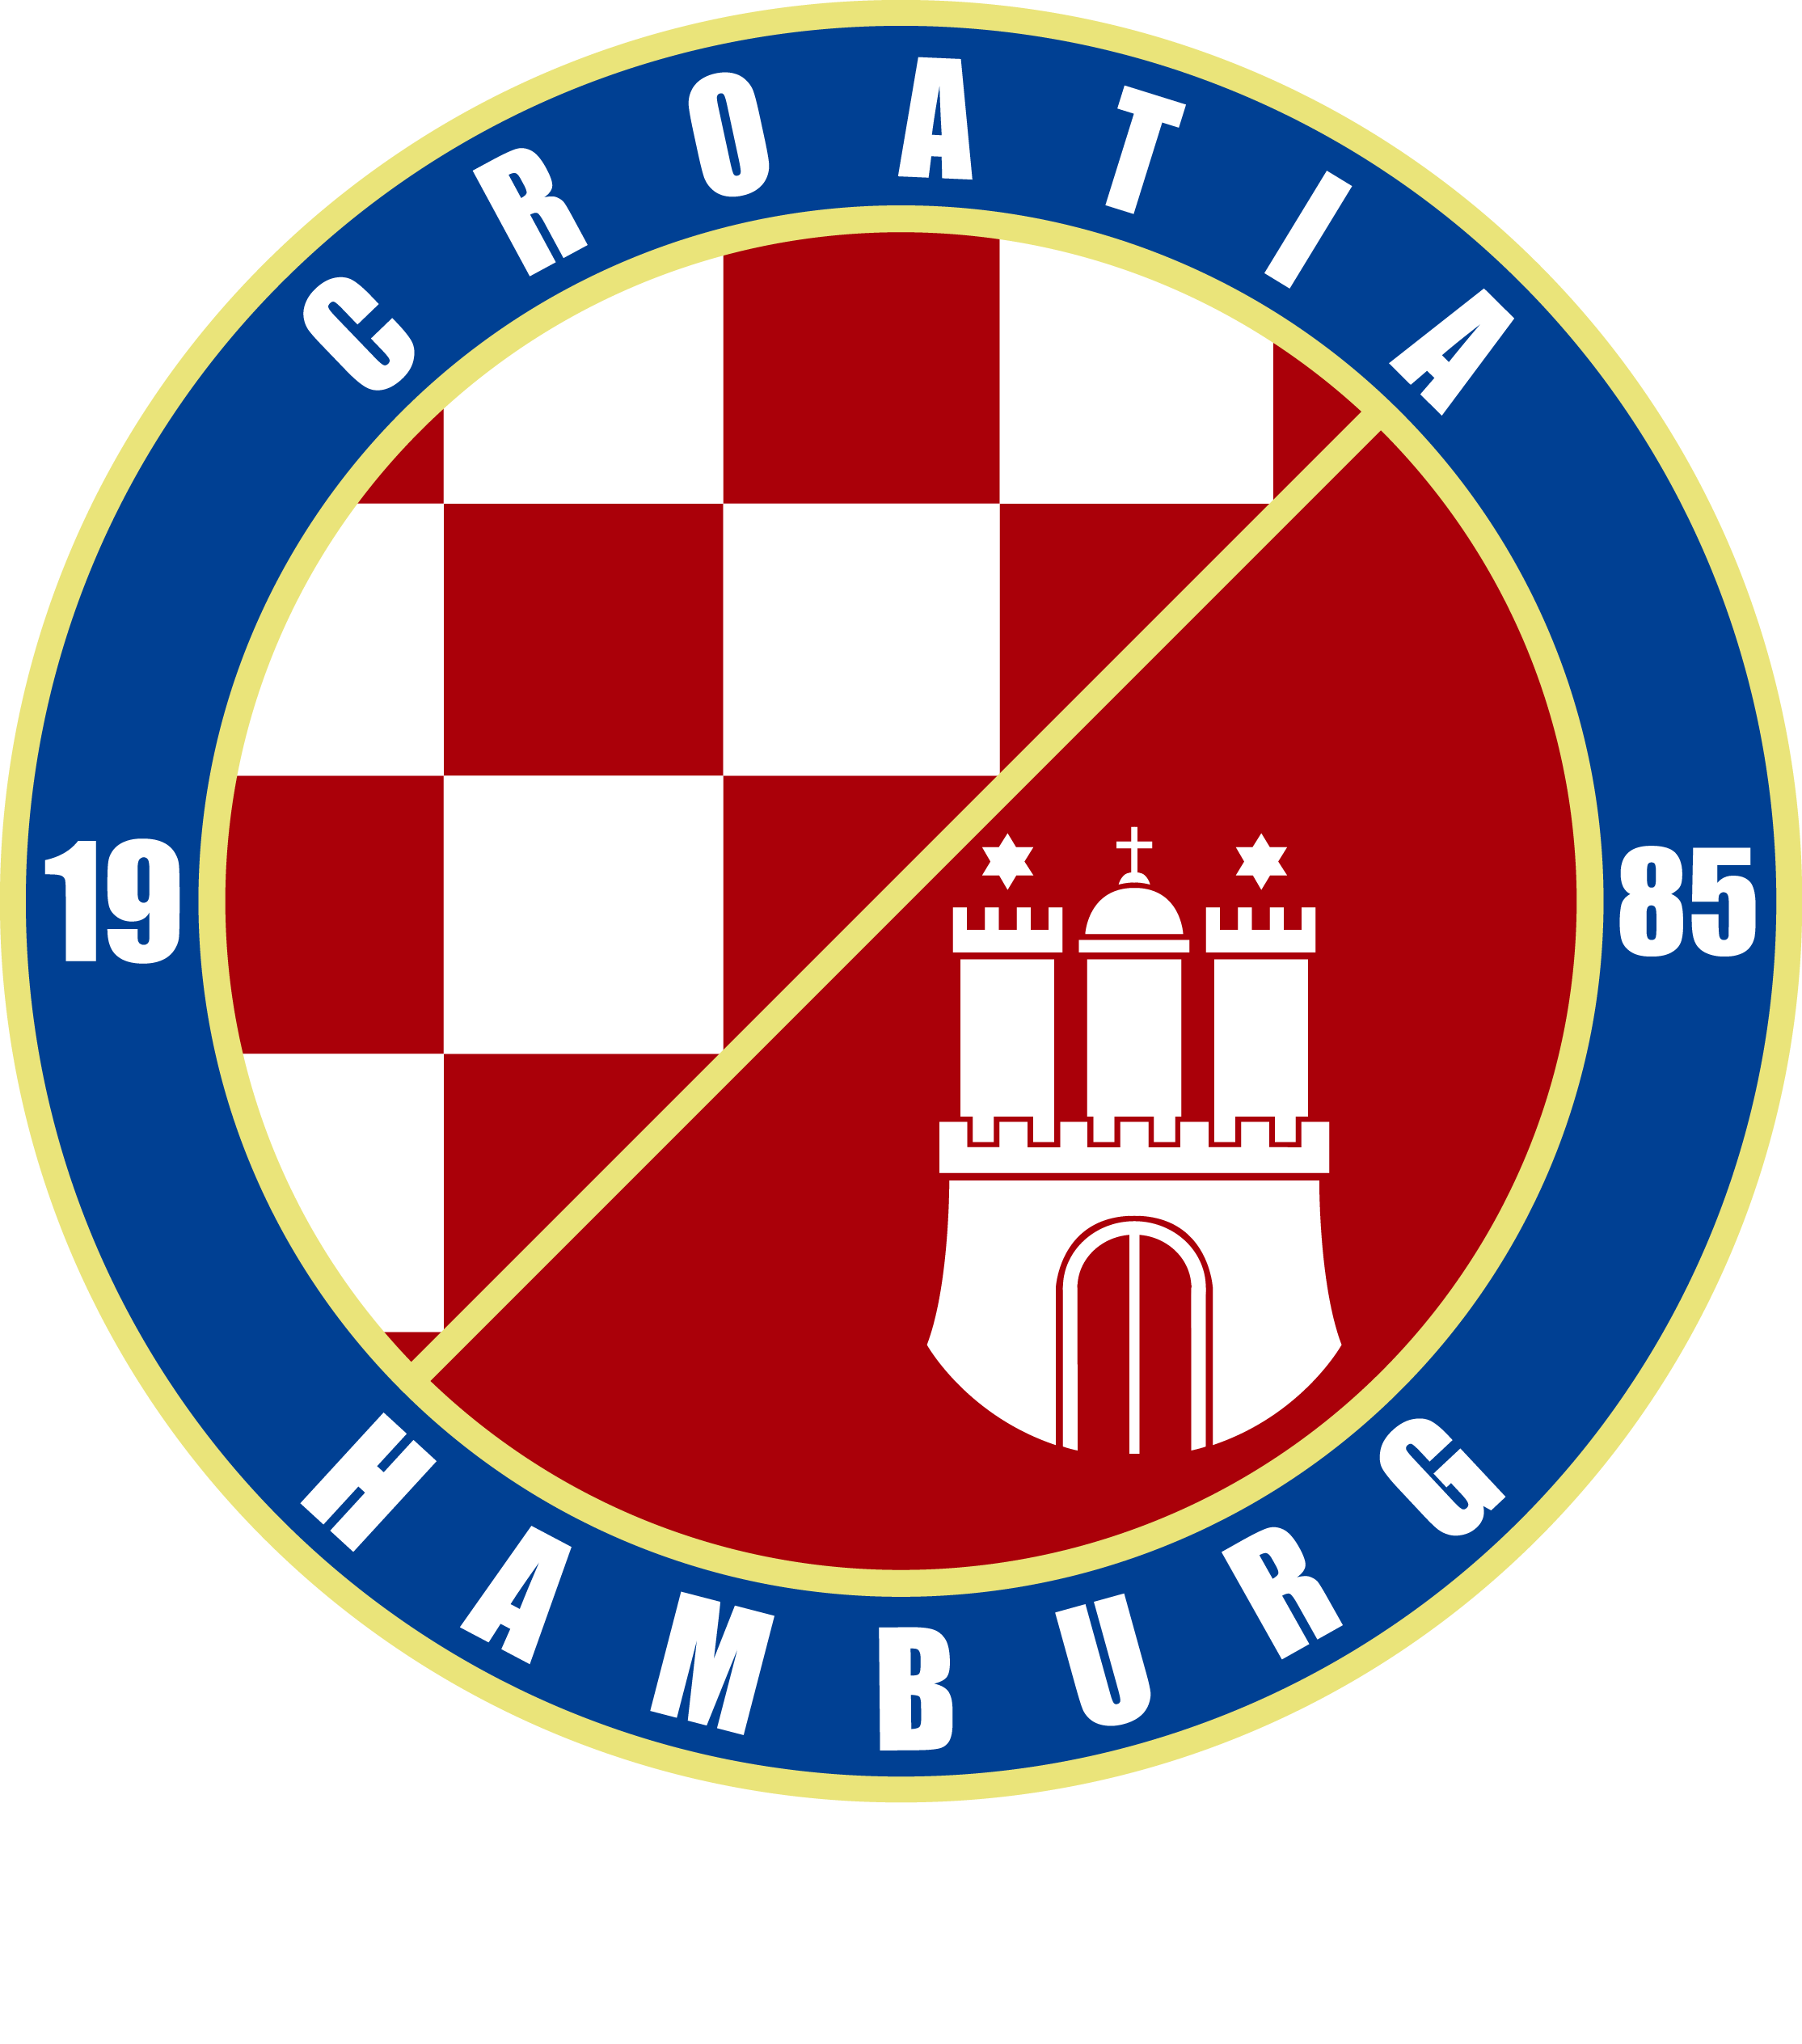 Logo Croatia Hamburg 2